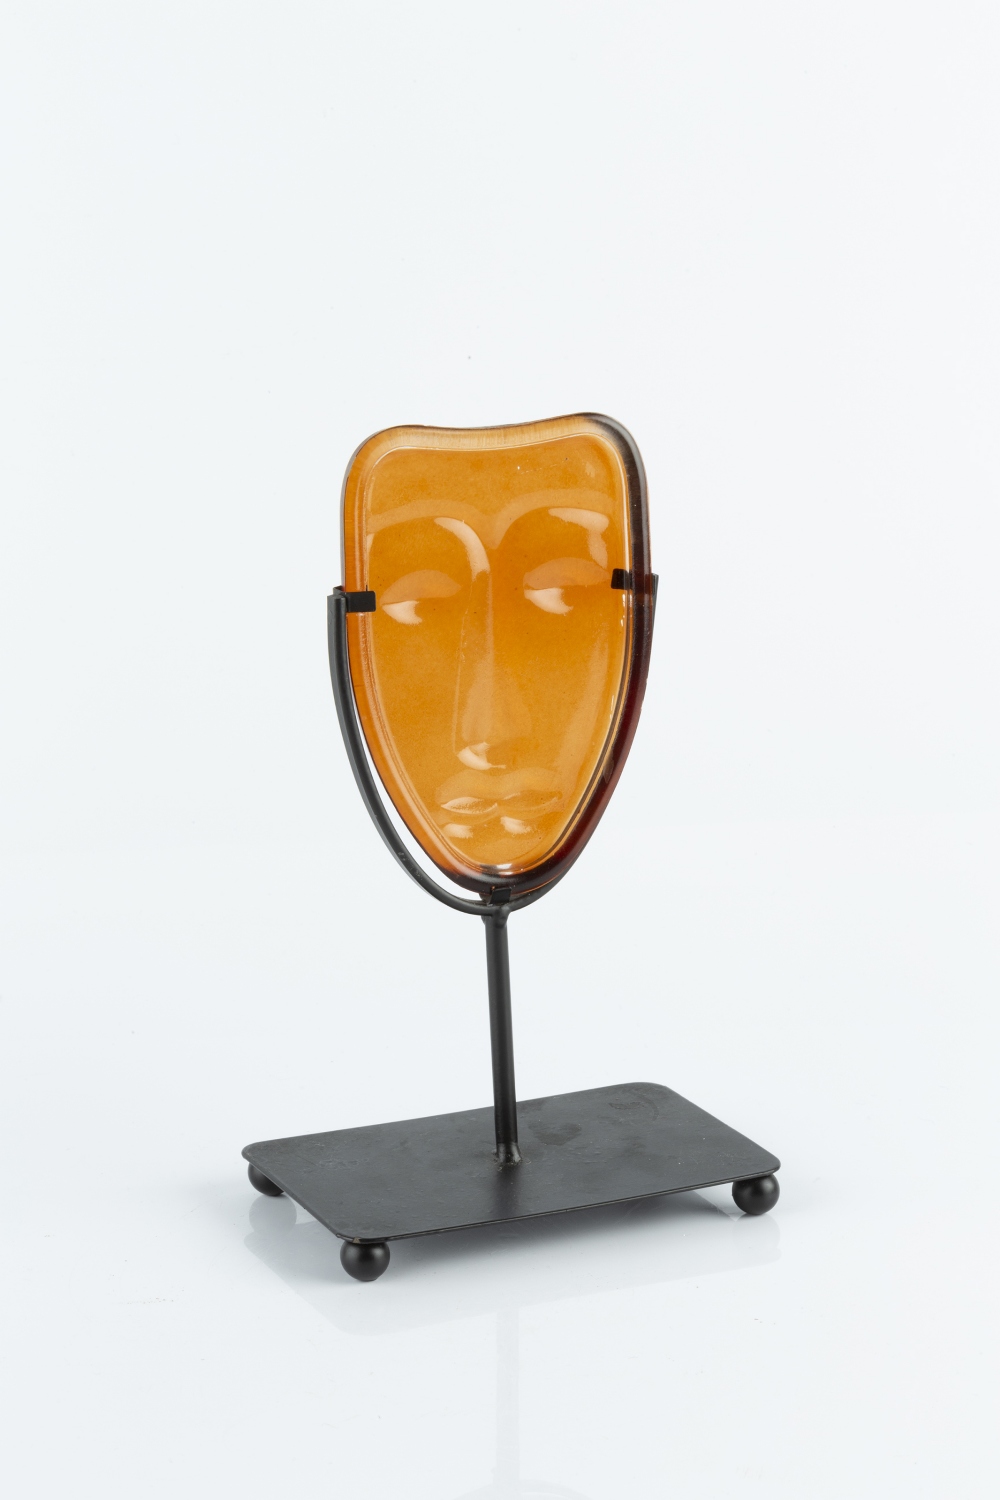 Erik Höglund for Kosta Boda Mask orange glass 12cm high.